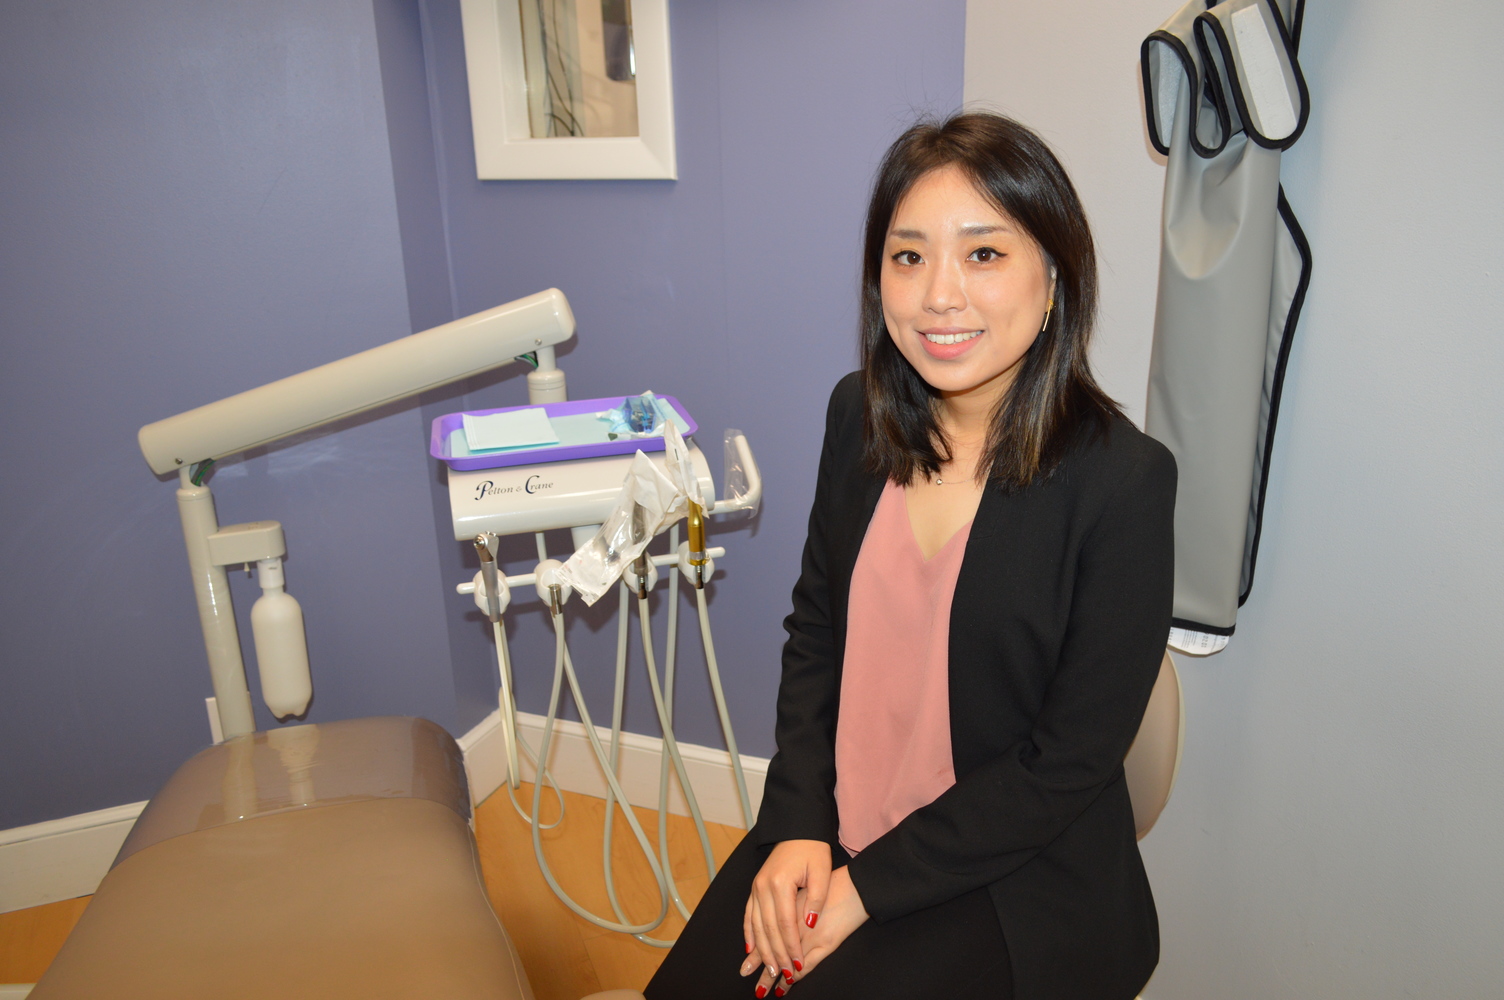 Dr. Jang Pediatric Dentist Dr. Yoon Ji Jang, DDS Newton (617)244-5020